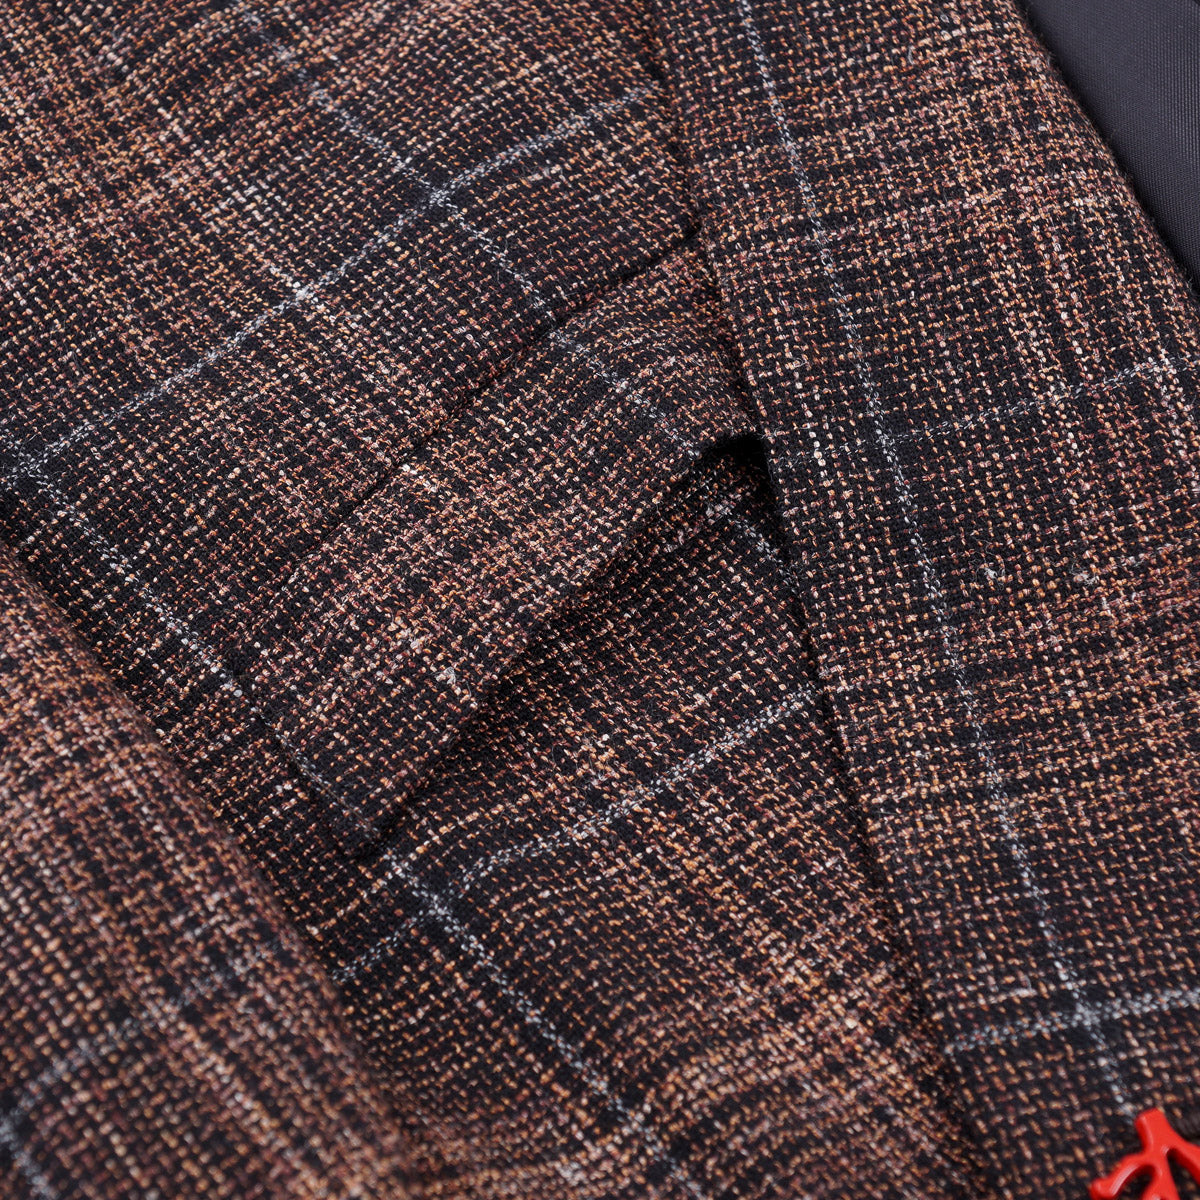 Isaia Woven Check Wool-Silk-Linen Suit - Top Shelf Apparel